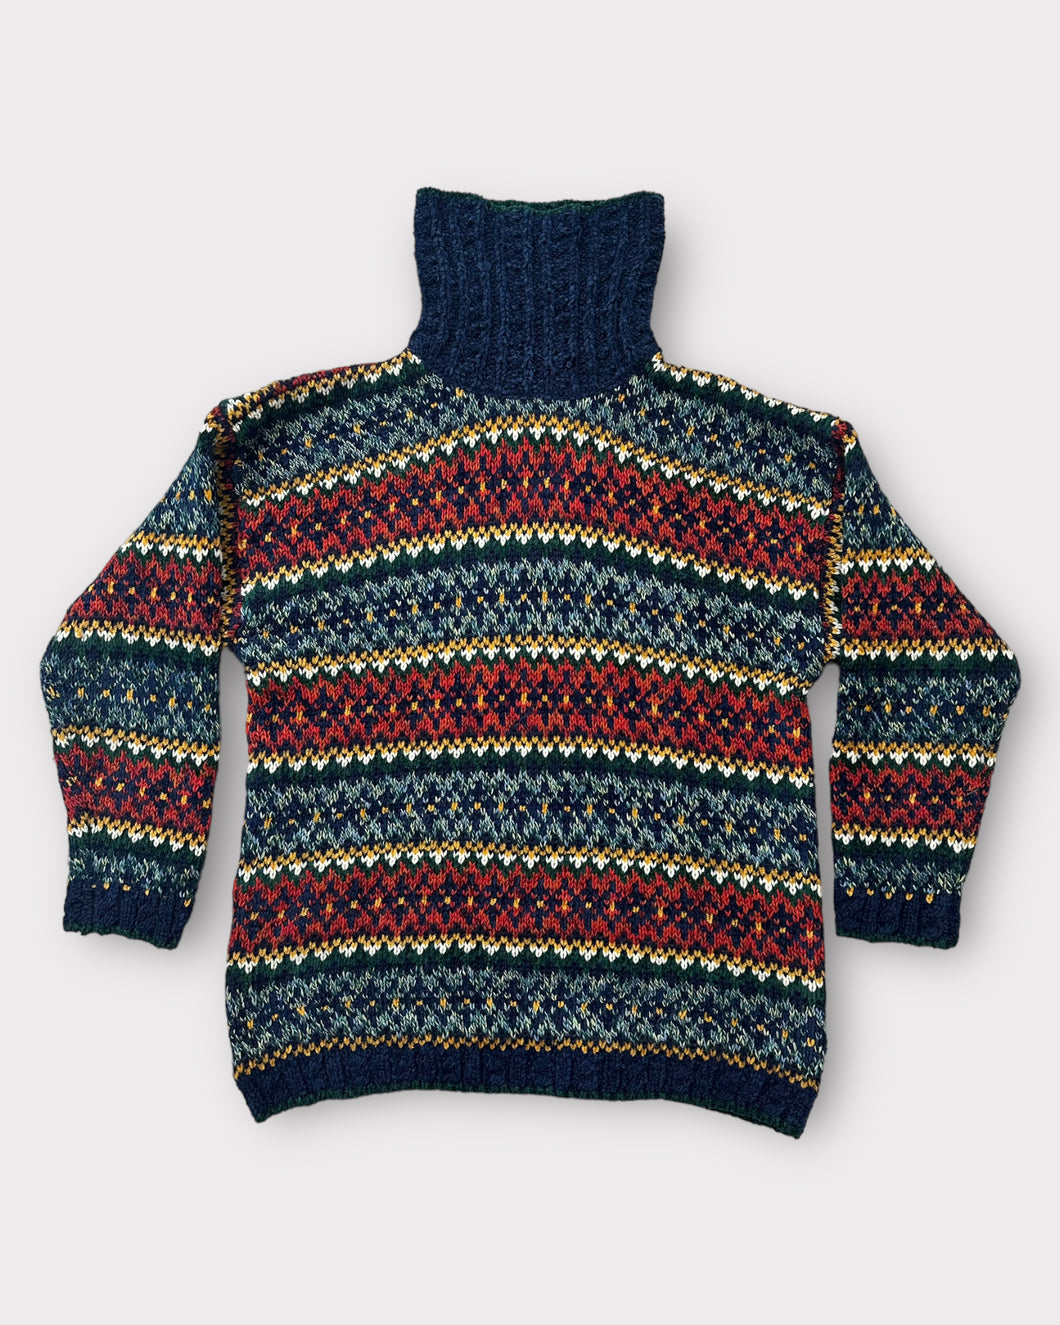 Liz Wear Vintage 90's Multicolored Chunky Oversized Sweater (M)